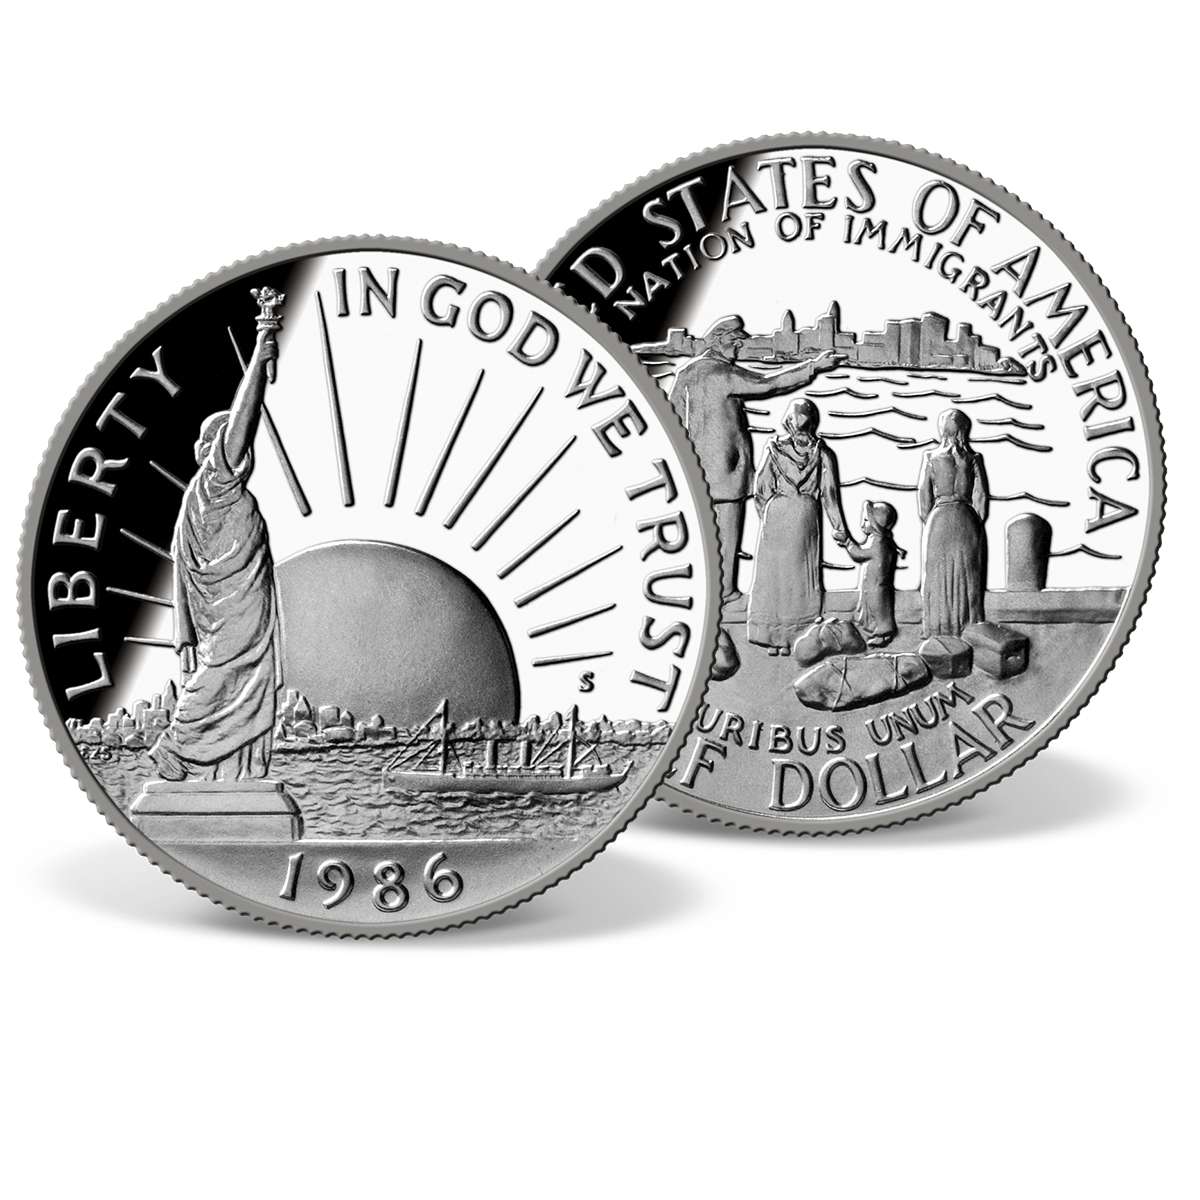 Statue of Liberty half dollar | Coin Talk